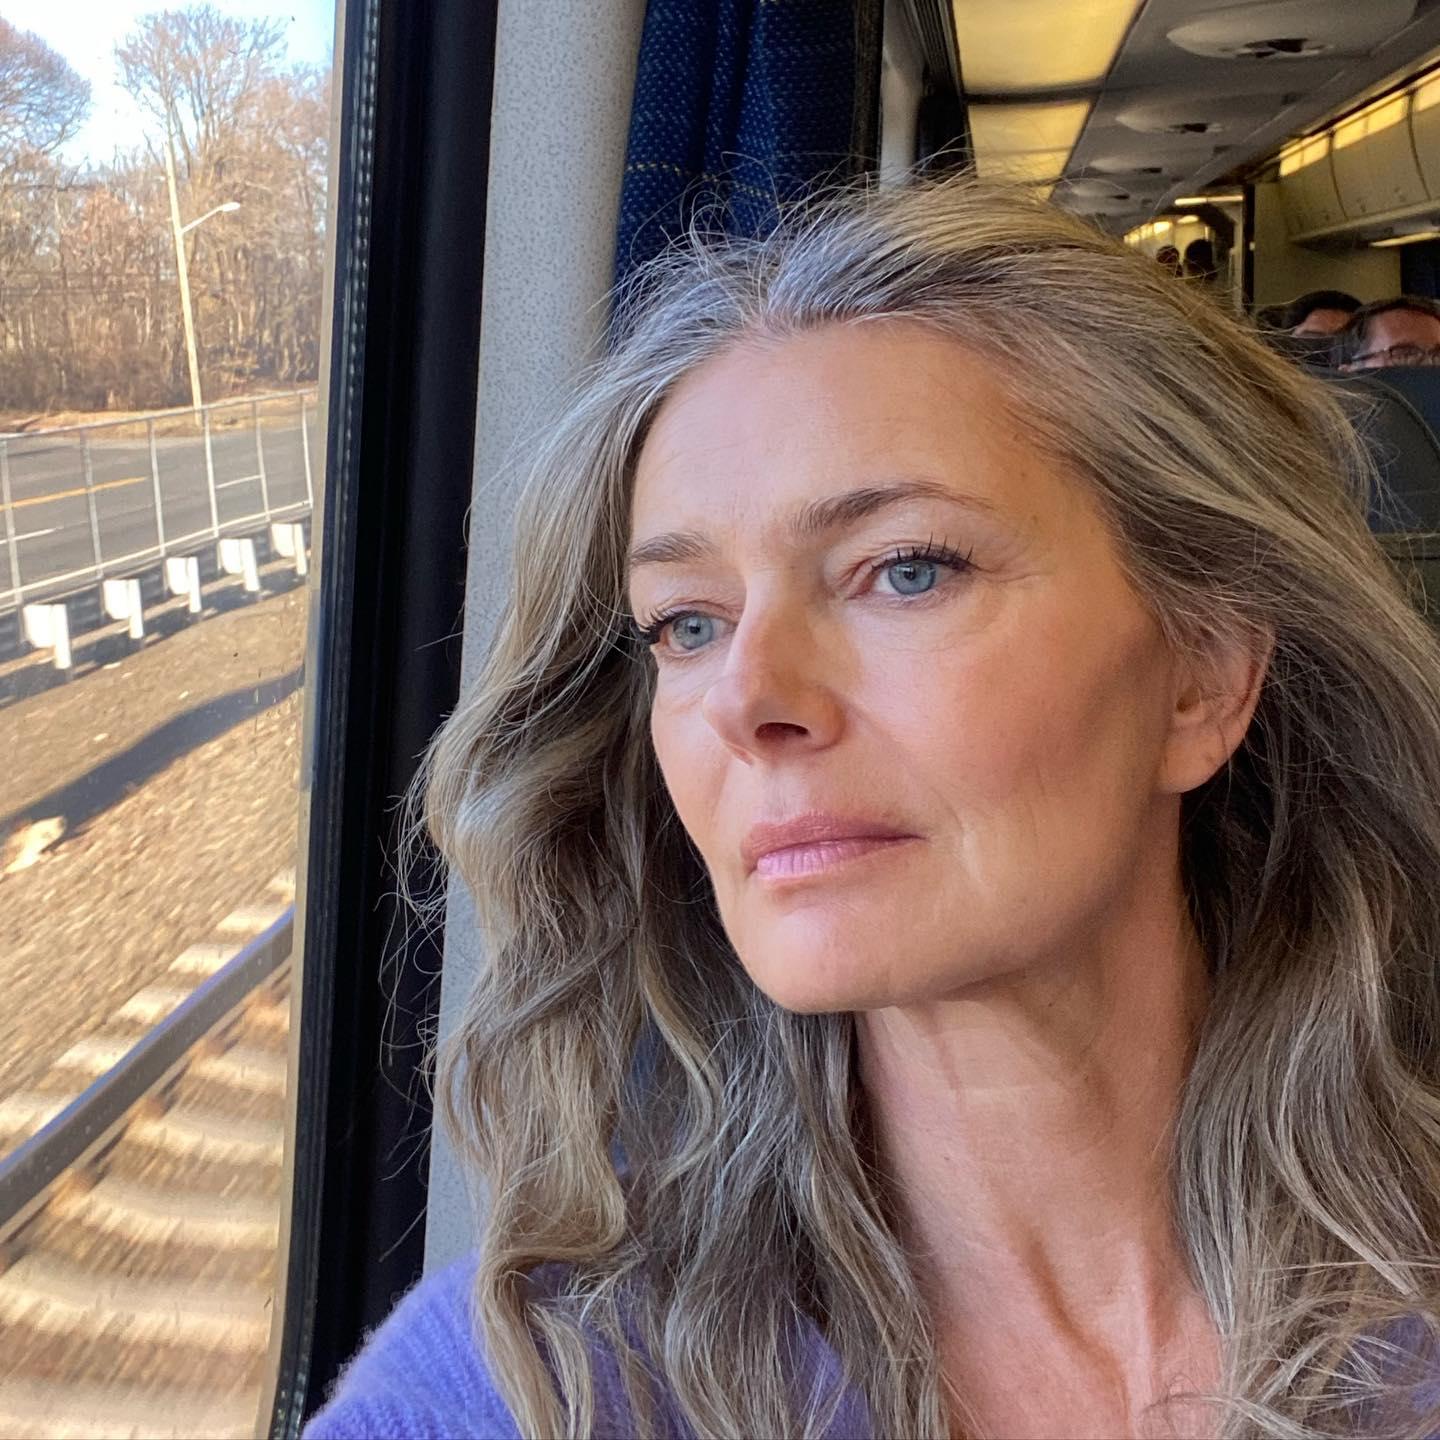 Paulina Porizkova looks sad on a train